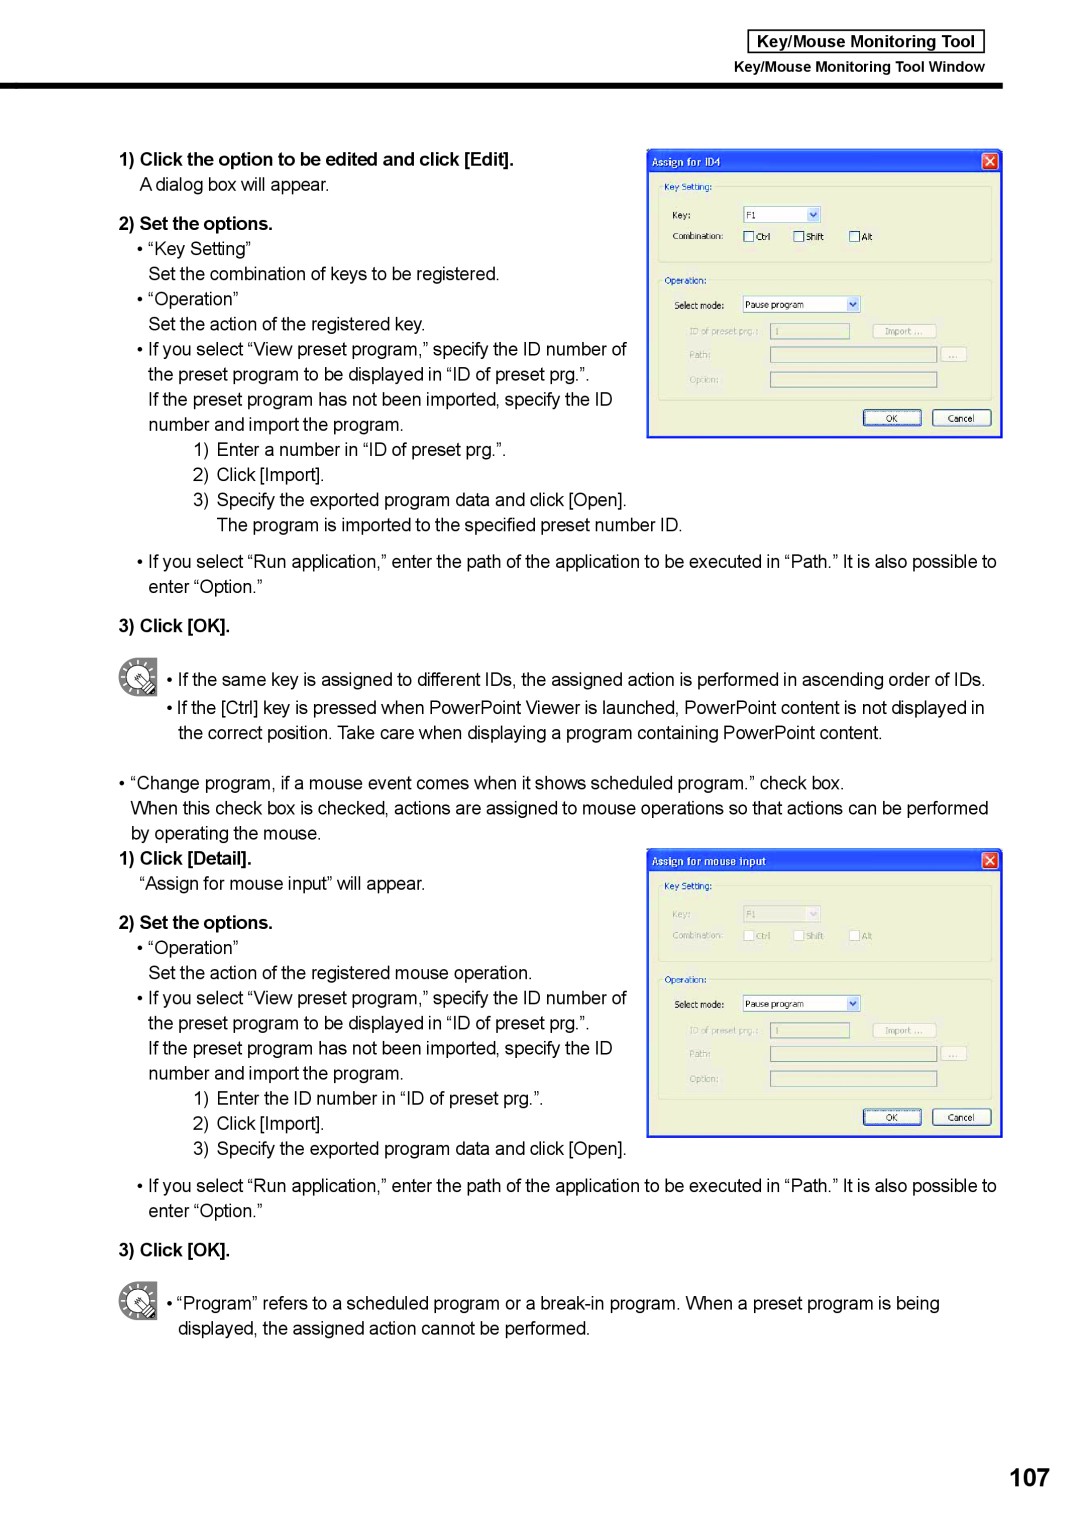 Sharp PNSV01 operation manual Set the options, Click OK, Click Detail 